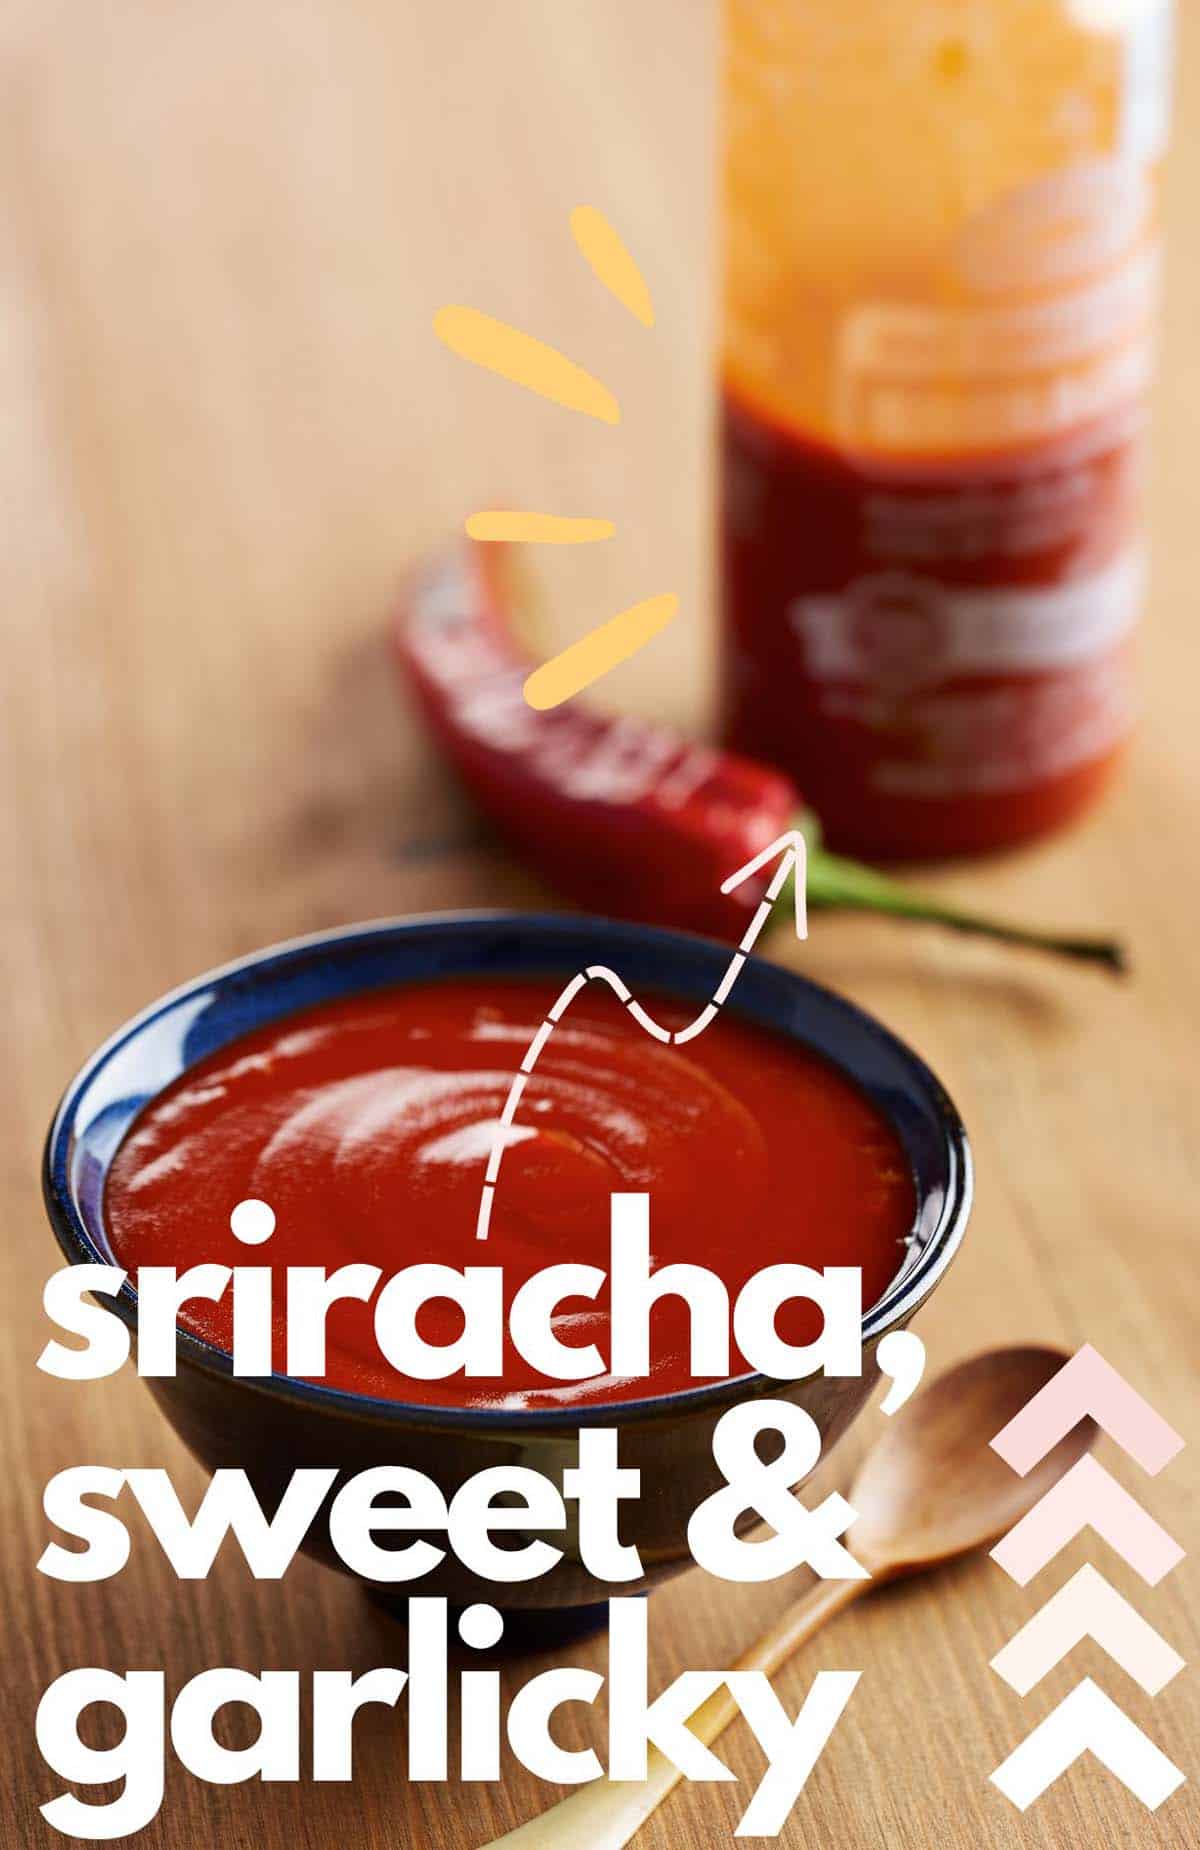 Bottle of Sriracha Chili Garlic Sauce substitute